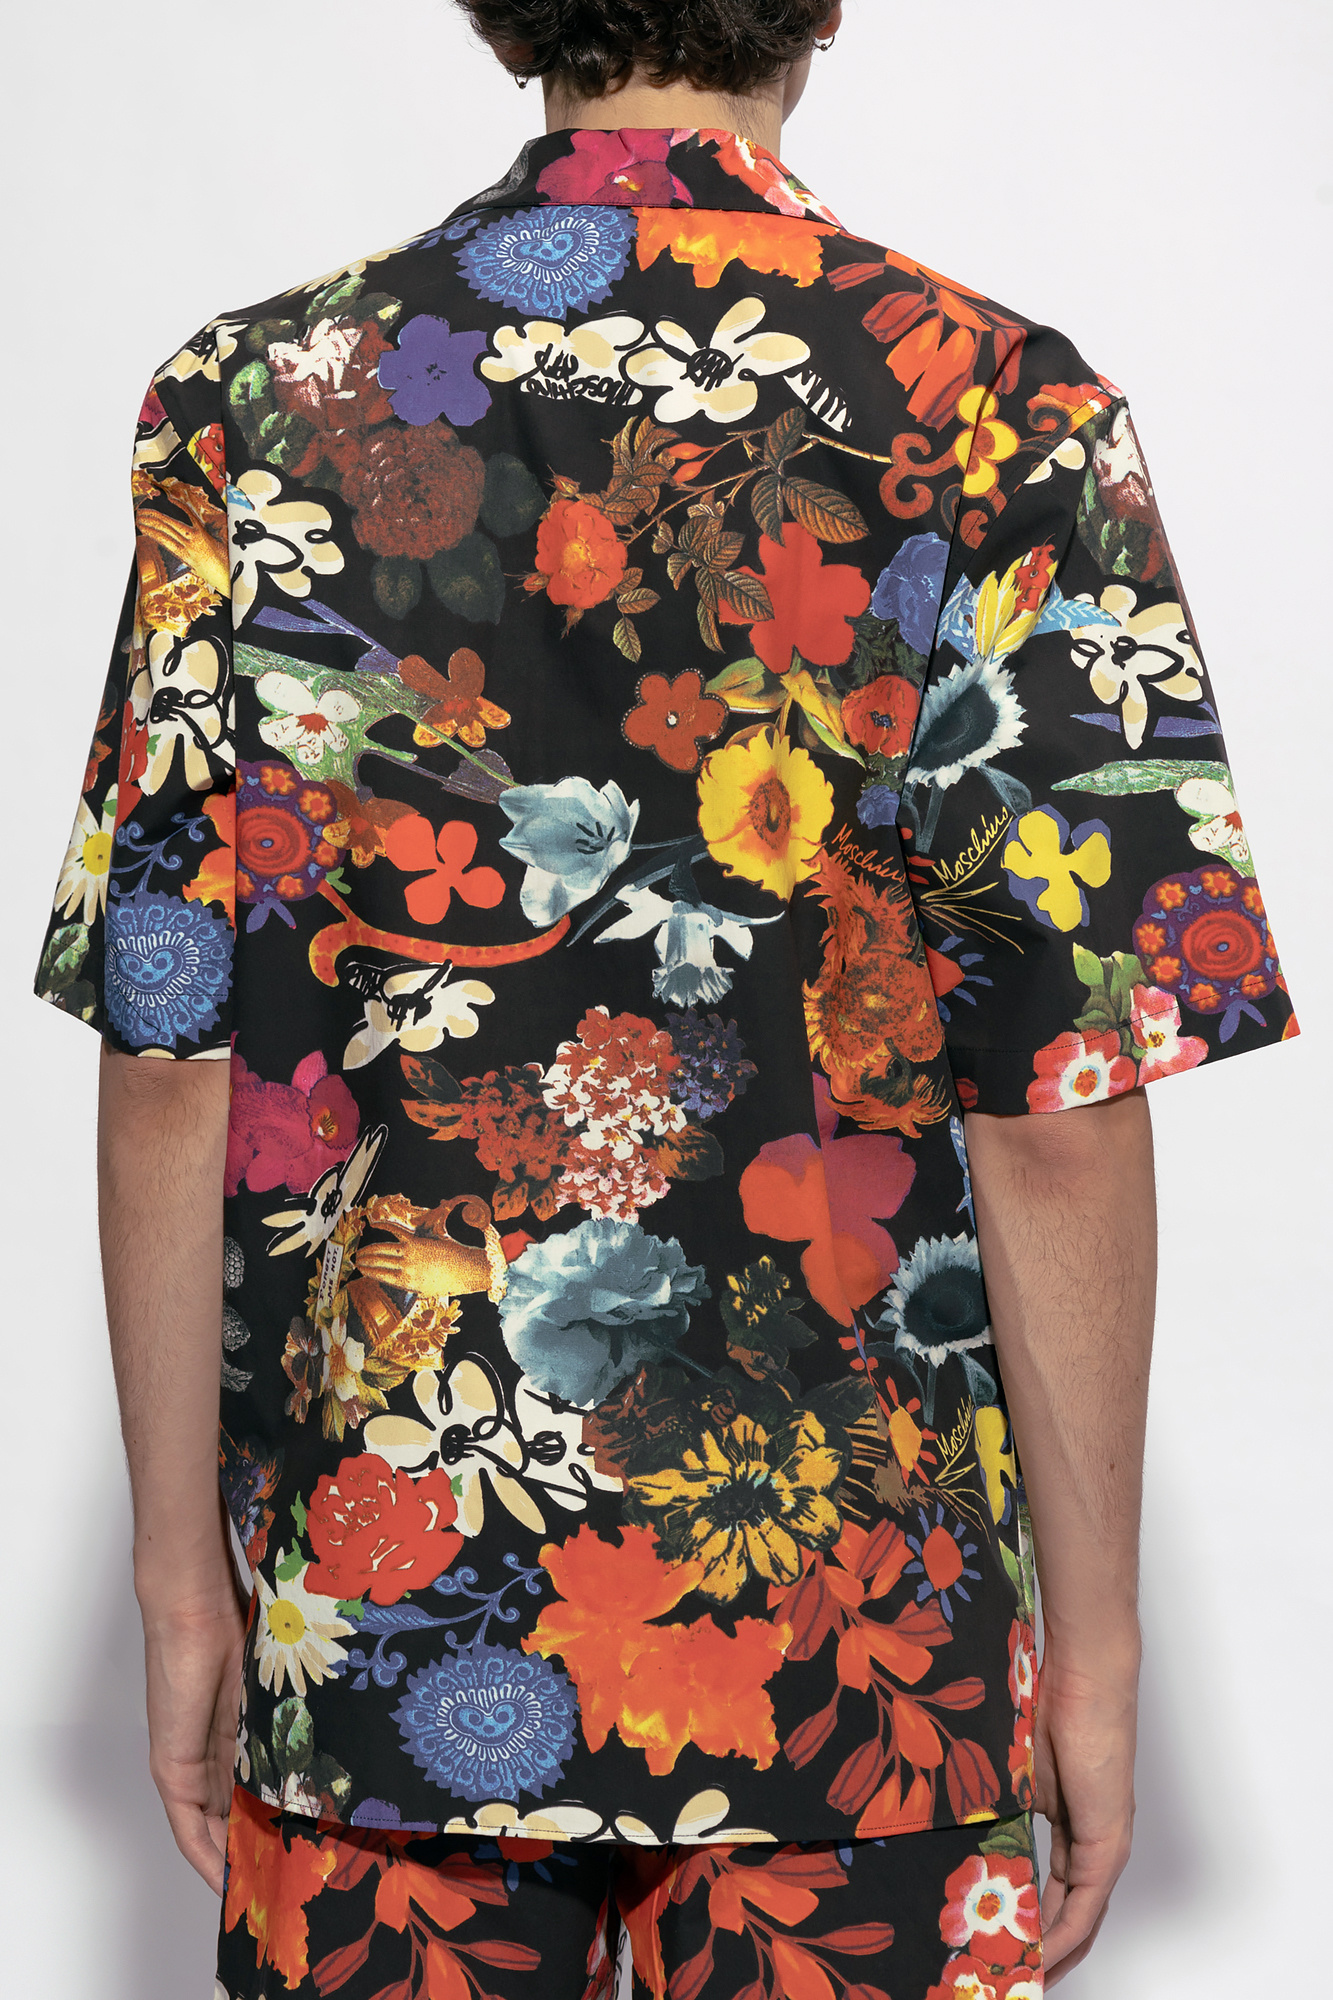 Moschino Floral Guess shirt